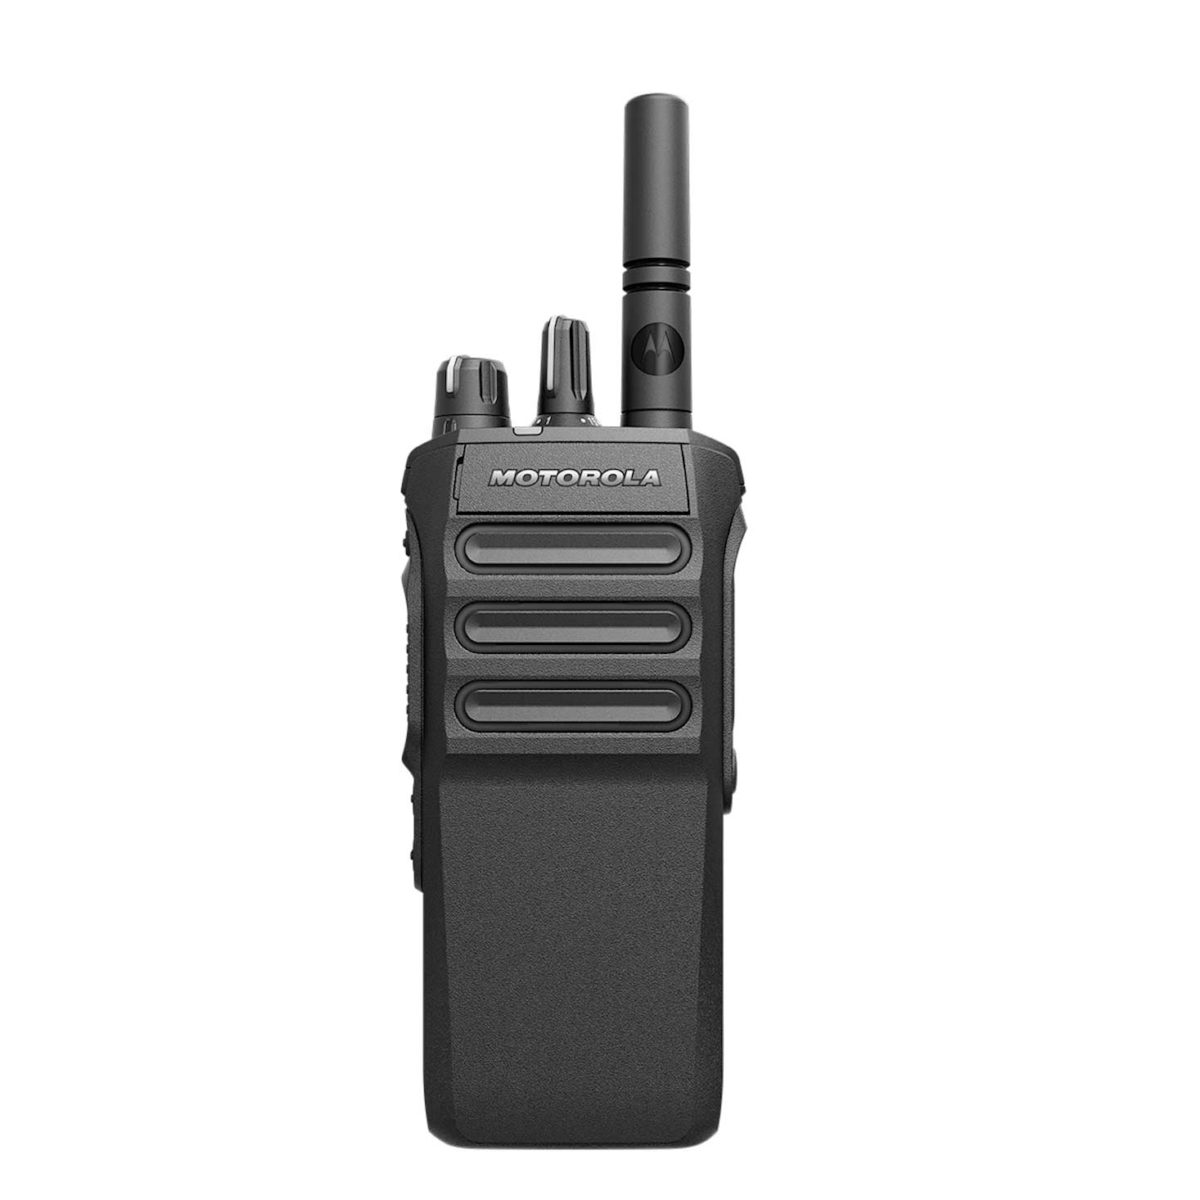 Portofoon Motorola R7 Non Keypad Premium UHF Voorzijde